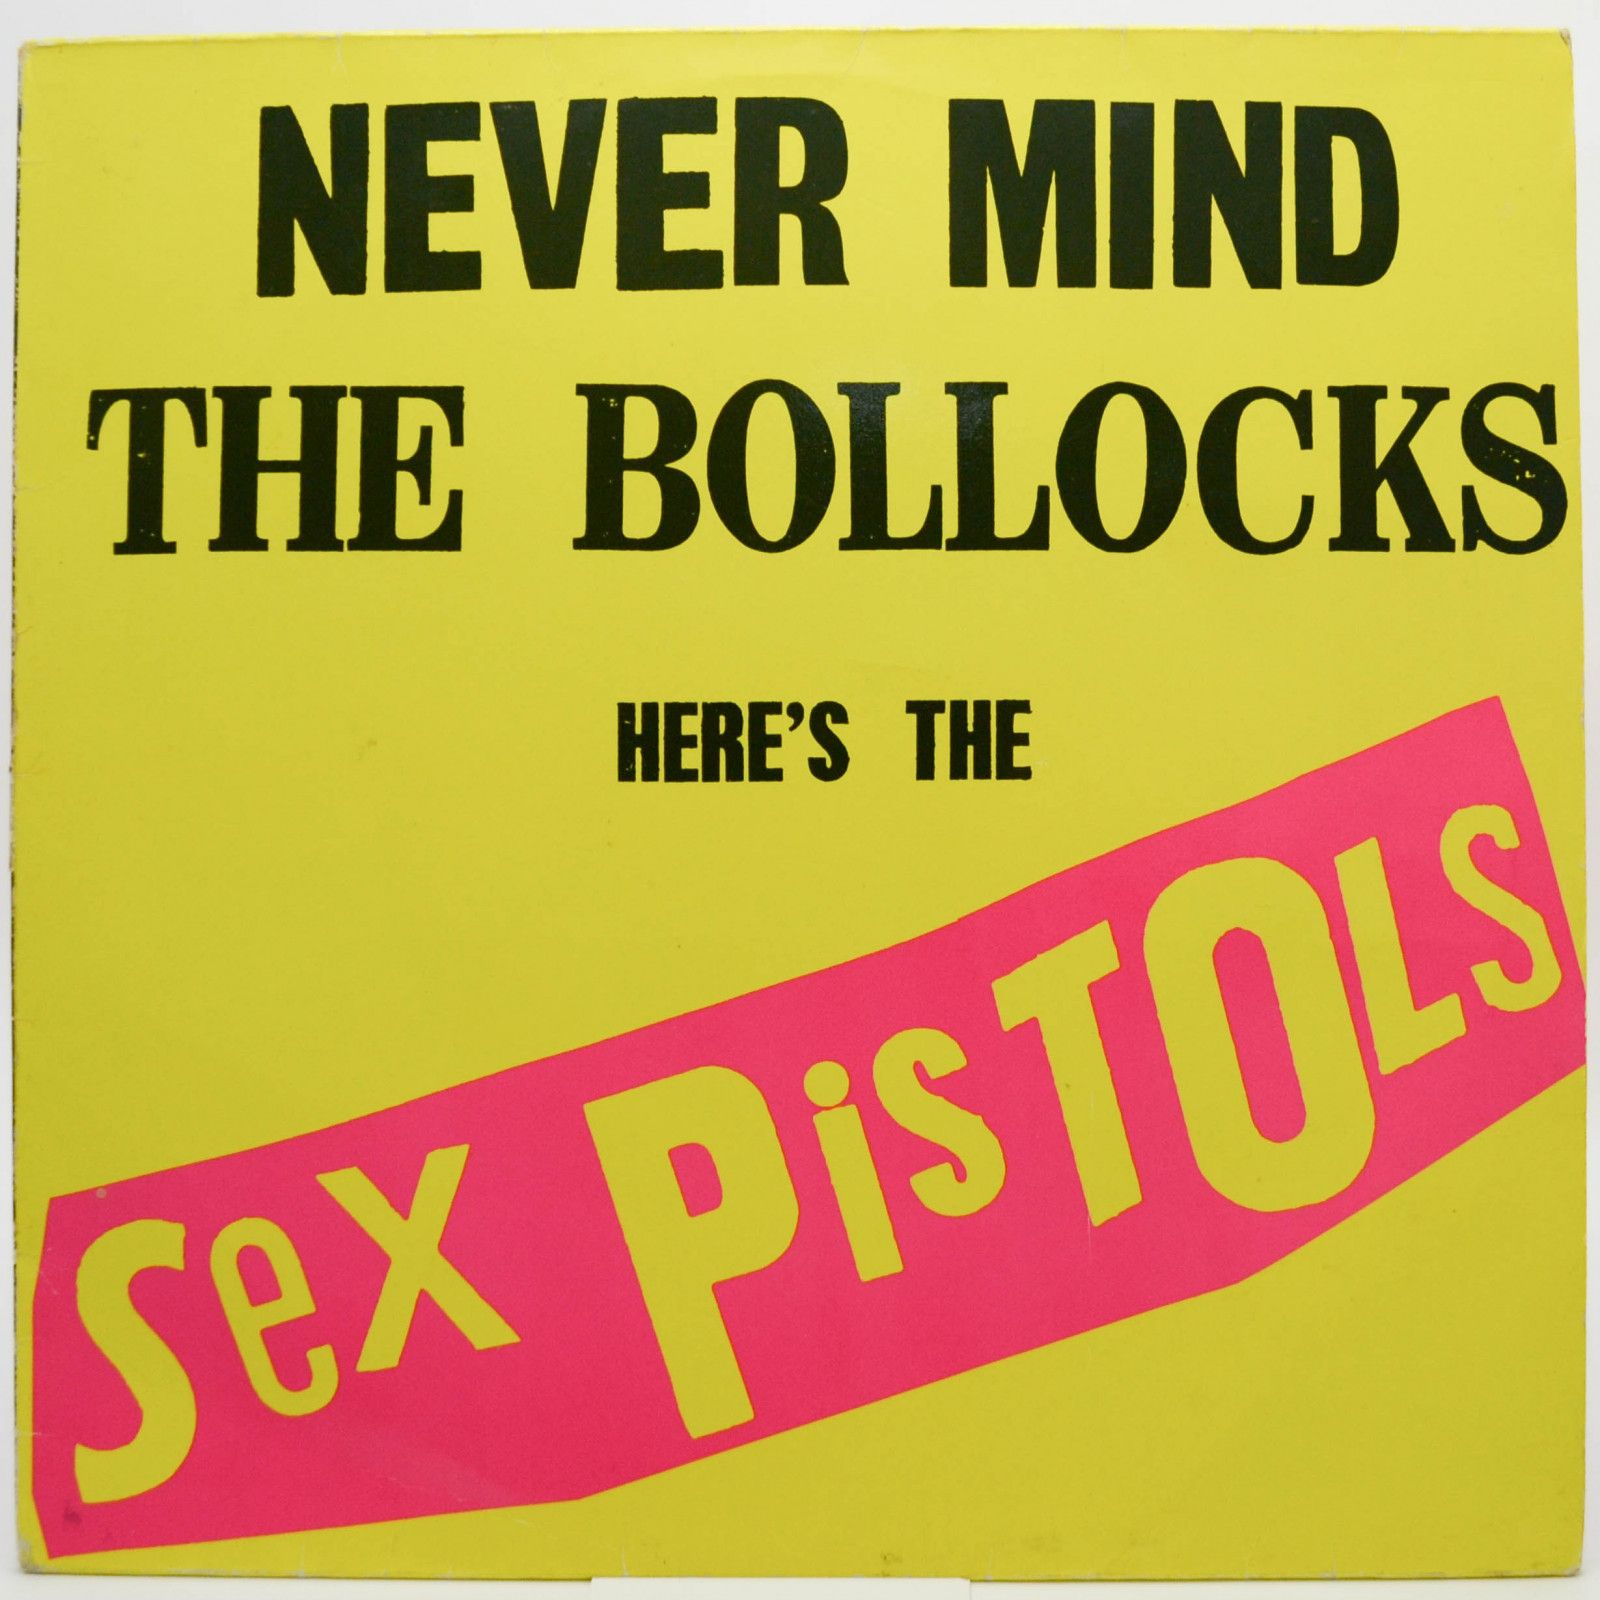 Sex Pistols — Never Mind The Bollocks Here's The Sex Pistols, 1976